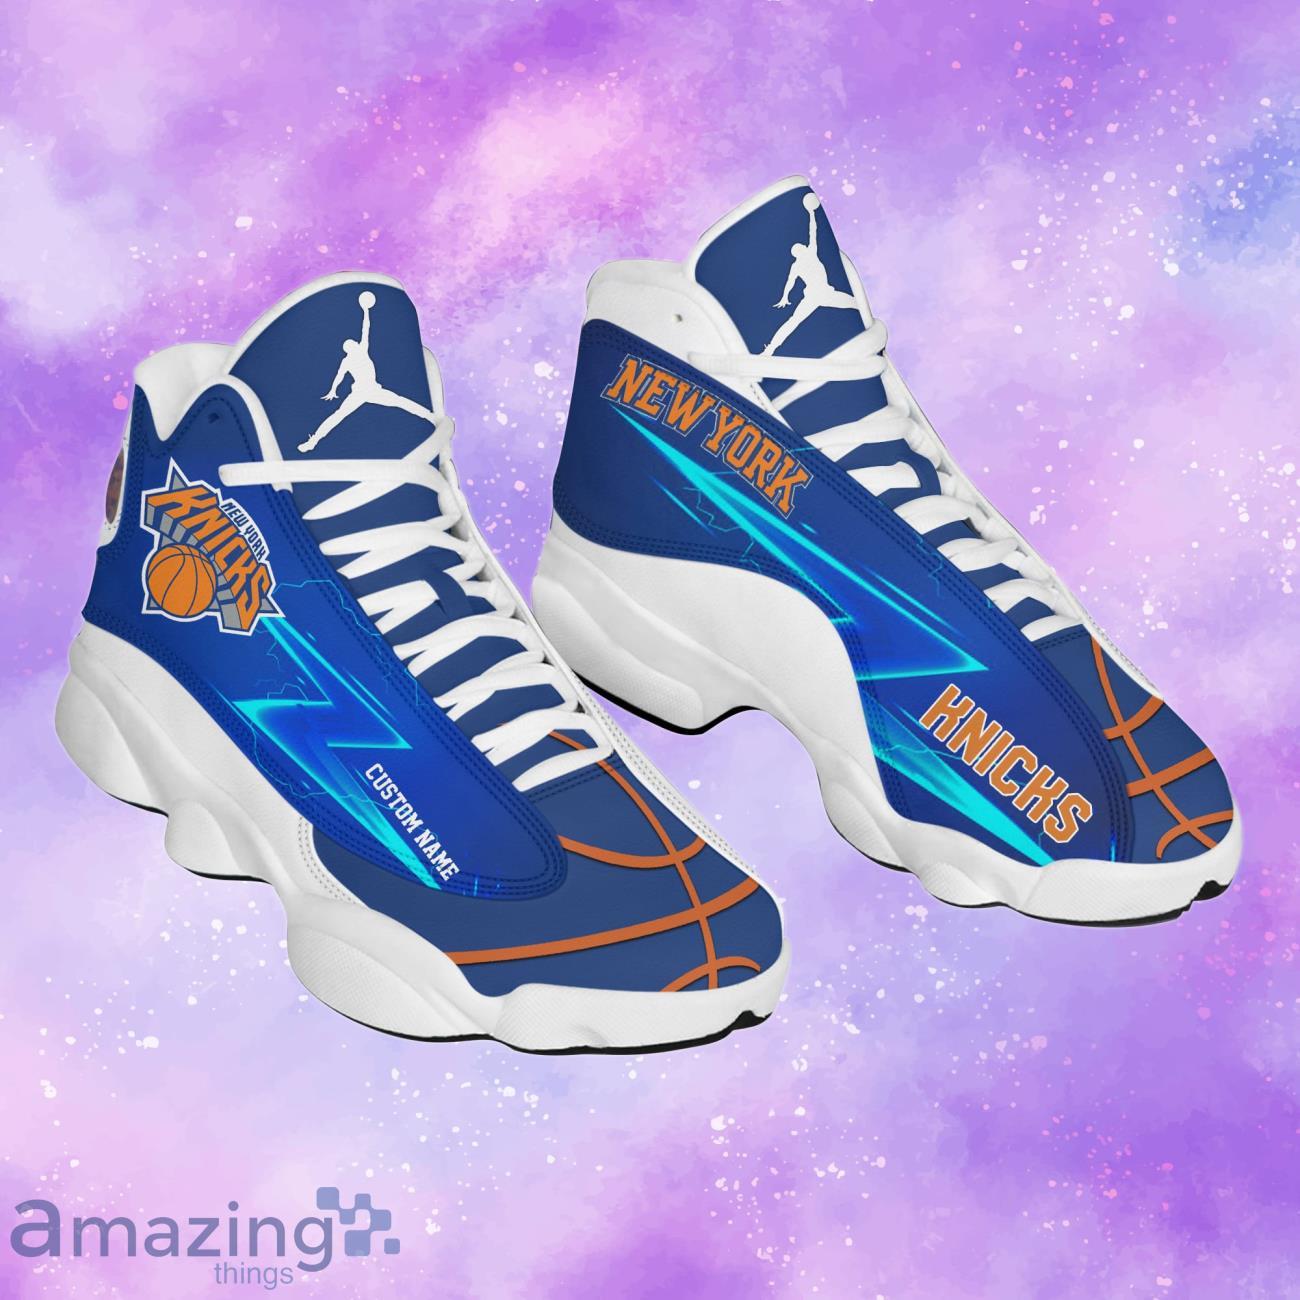 NBA New York Knicks Air Jordan 13 Custom Name Shoes For Real Fans